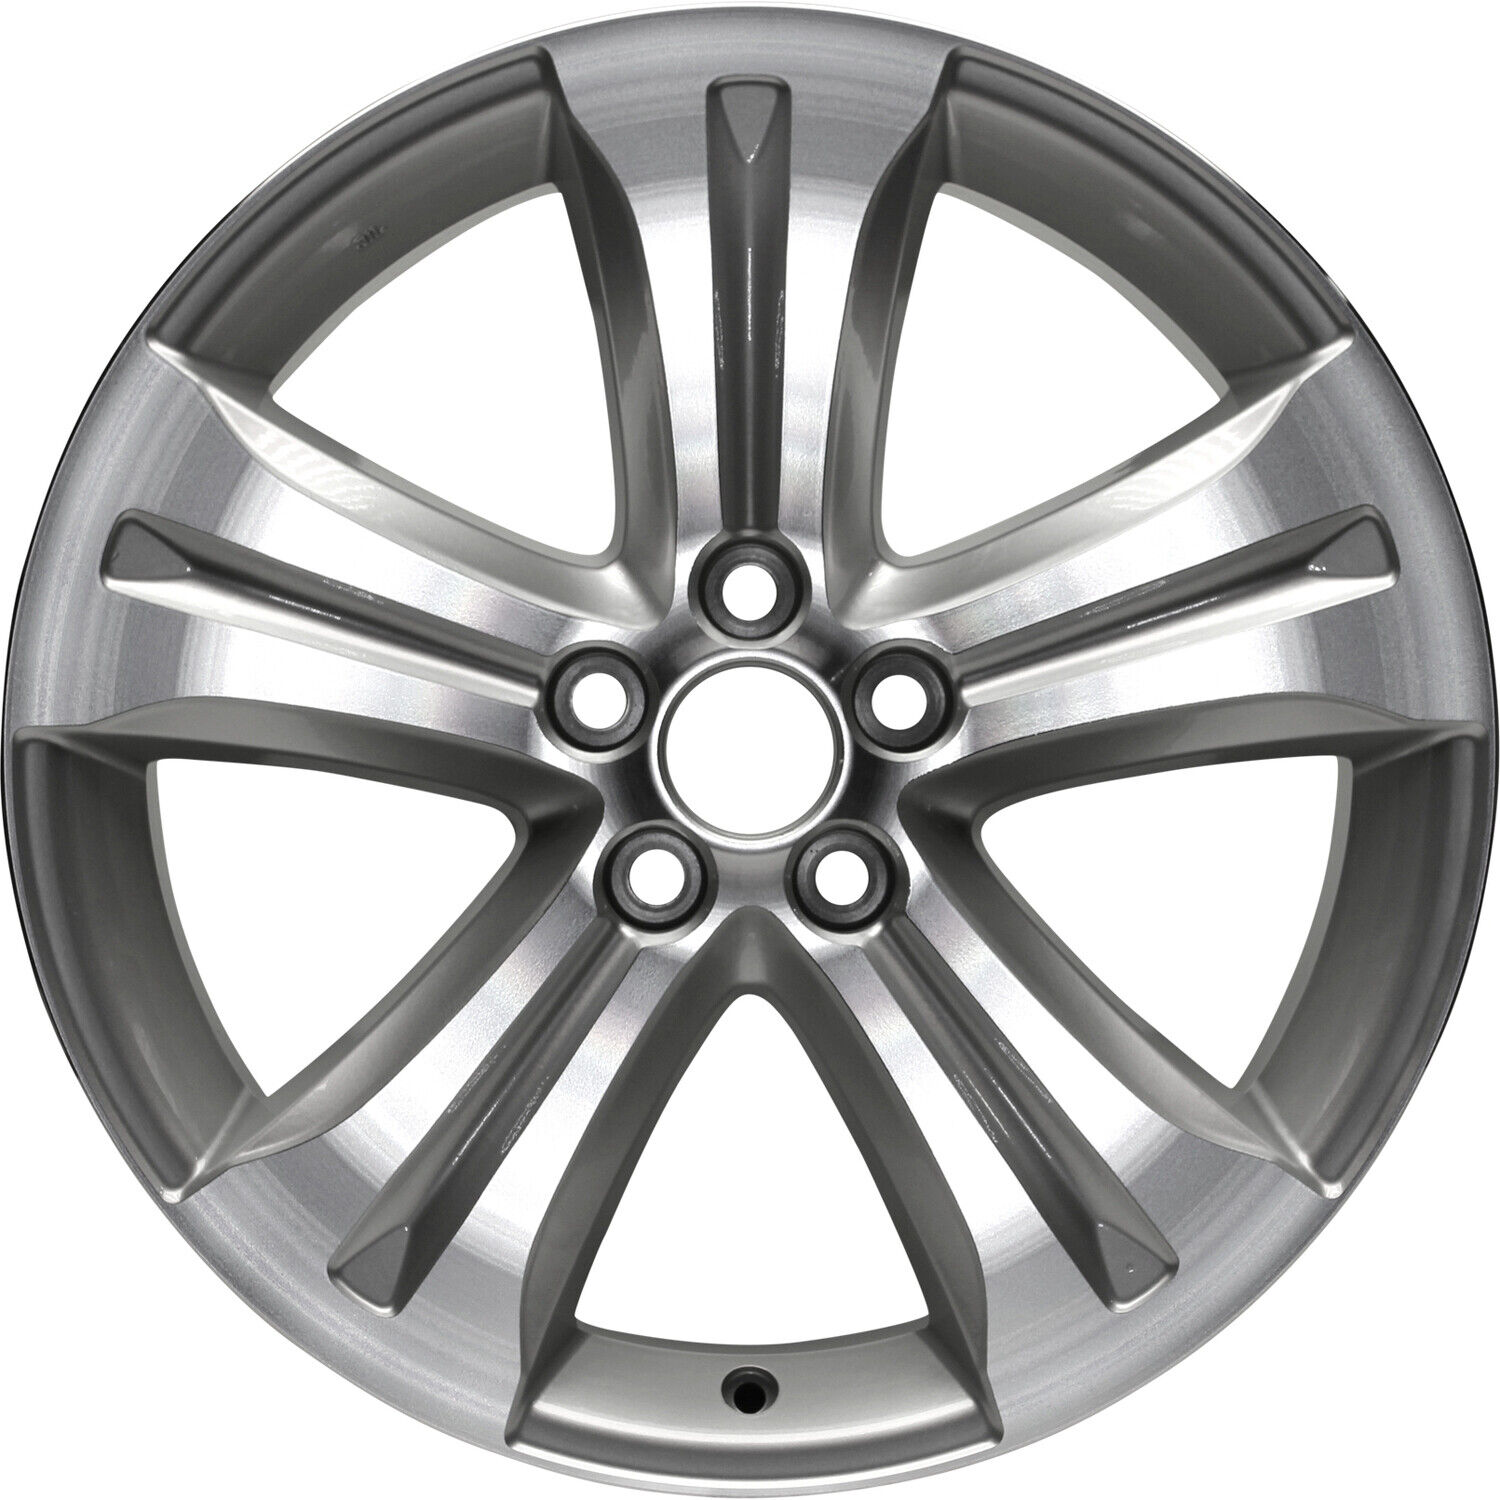 69536 Reconditioned OEM Aluminum Wheel 19x7.5 fits 2008-2013 Toyota Highlander